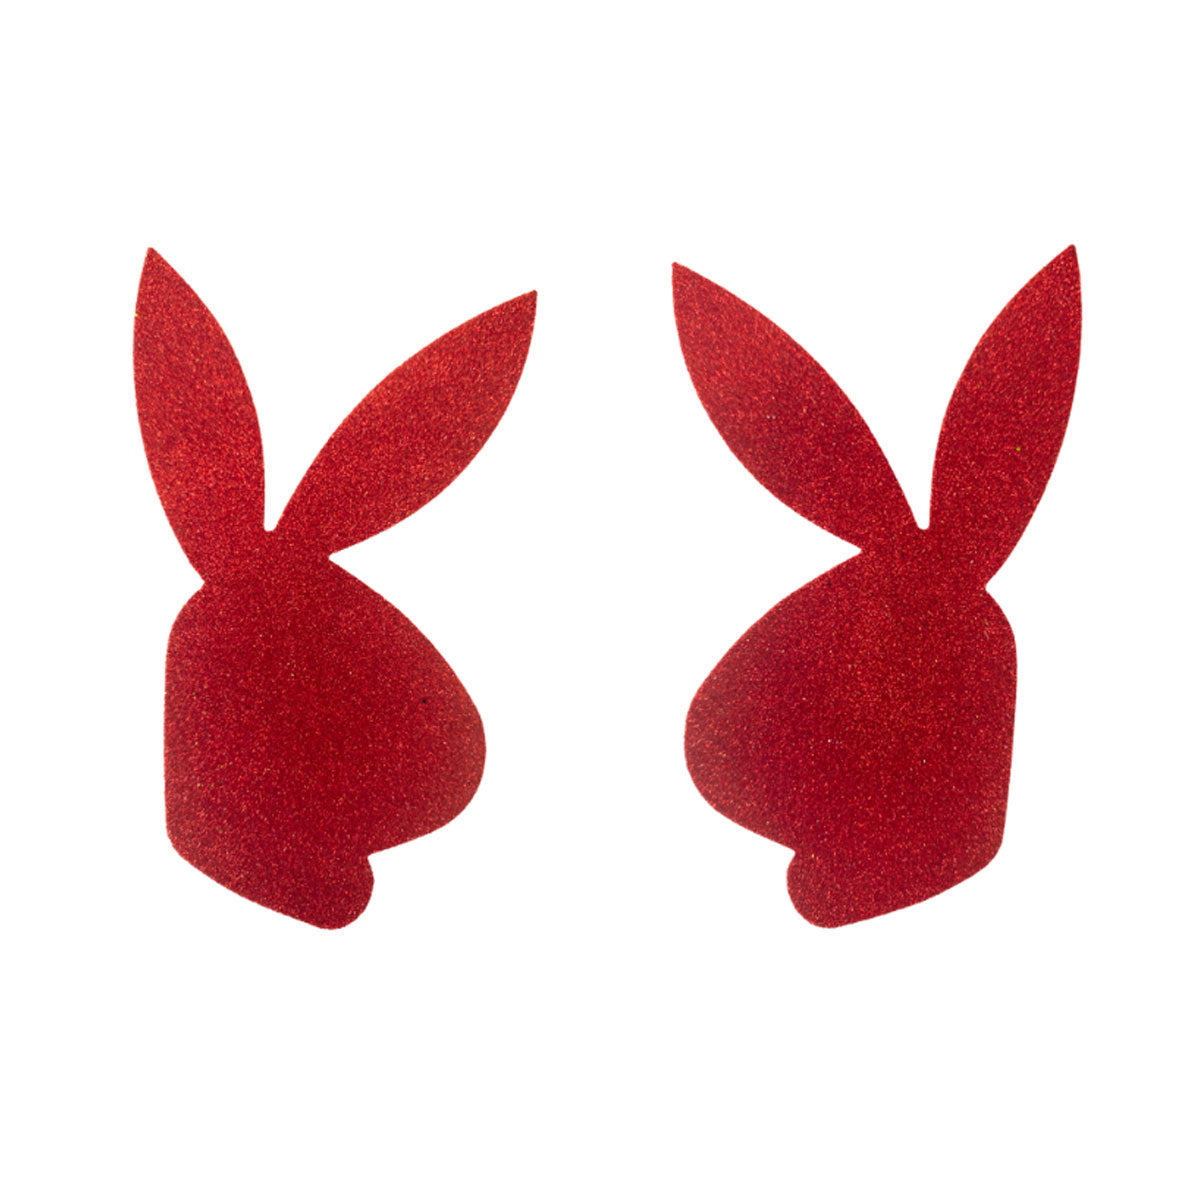 BUNNY BON BON - Glitter Bunny Nipple Covers, Pasties, Body Jewelry